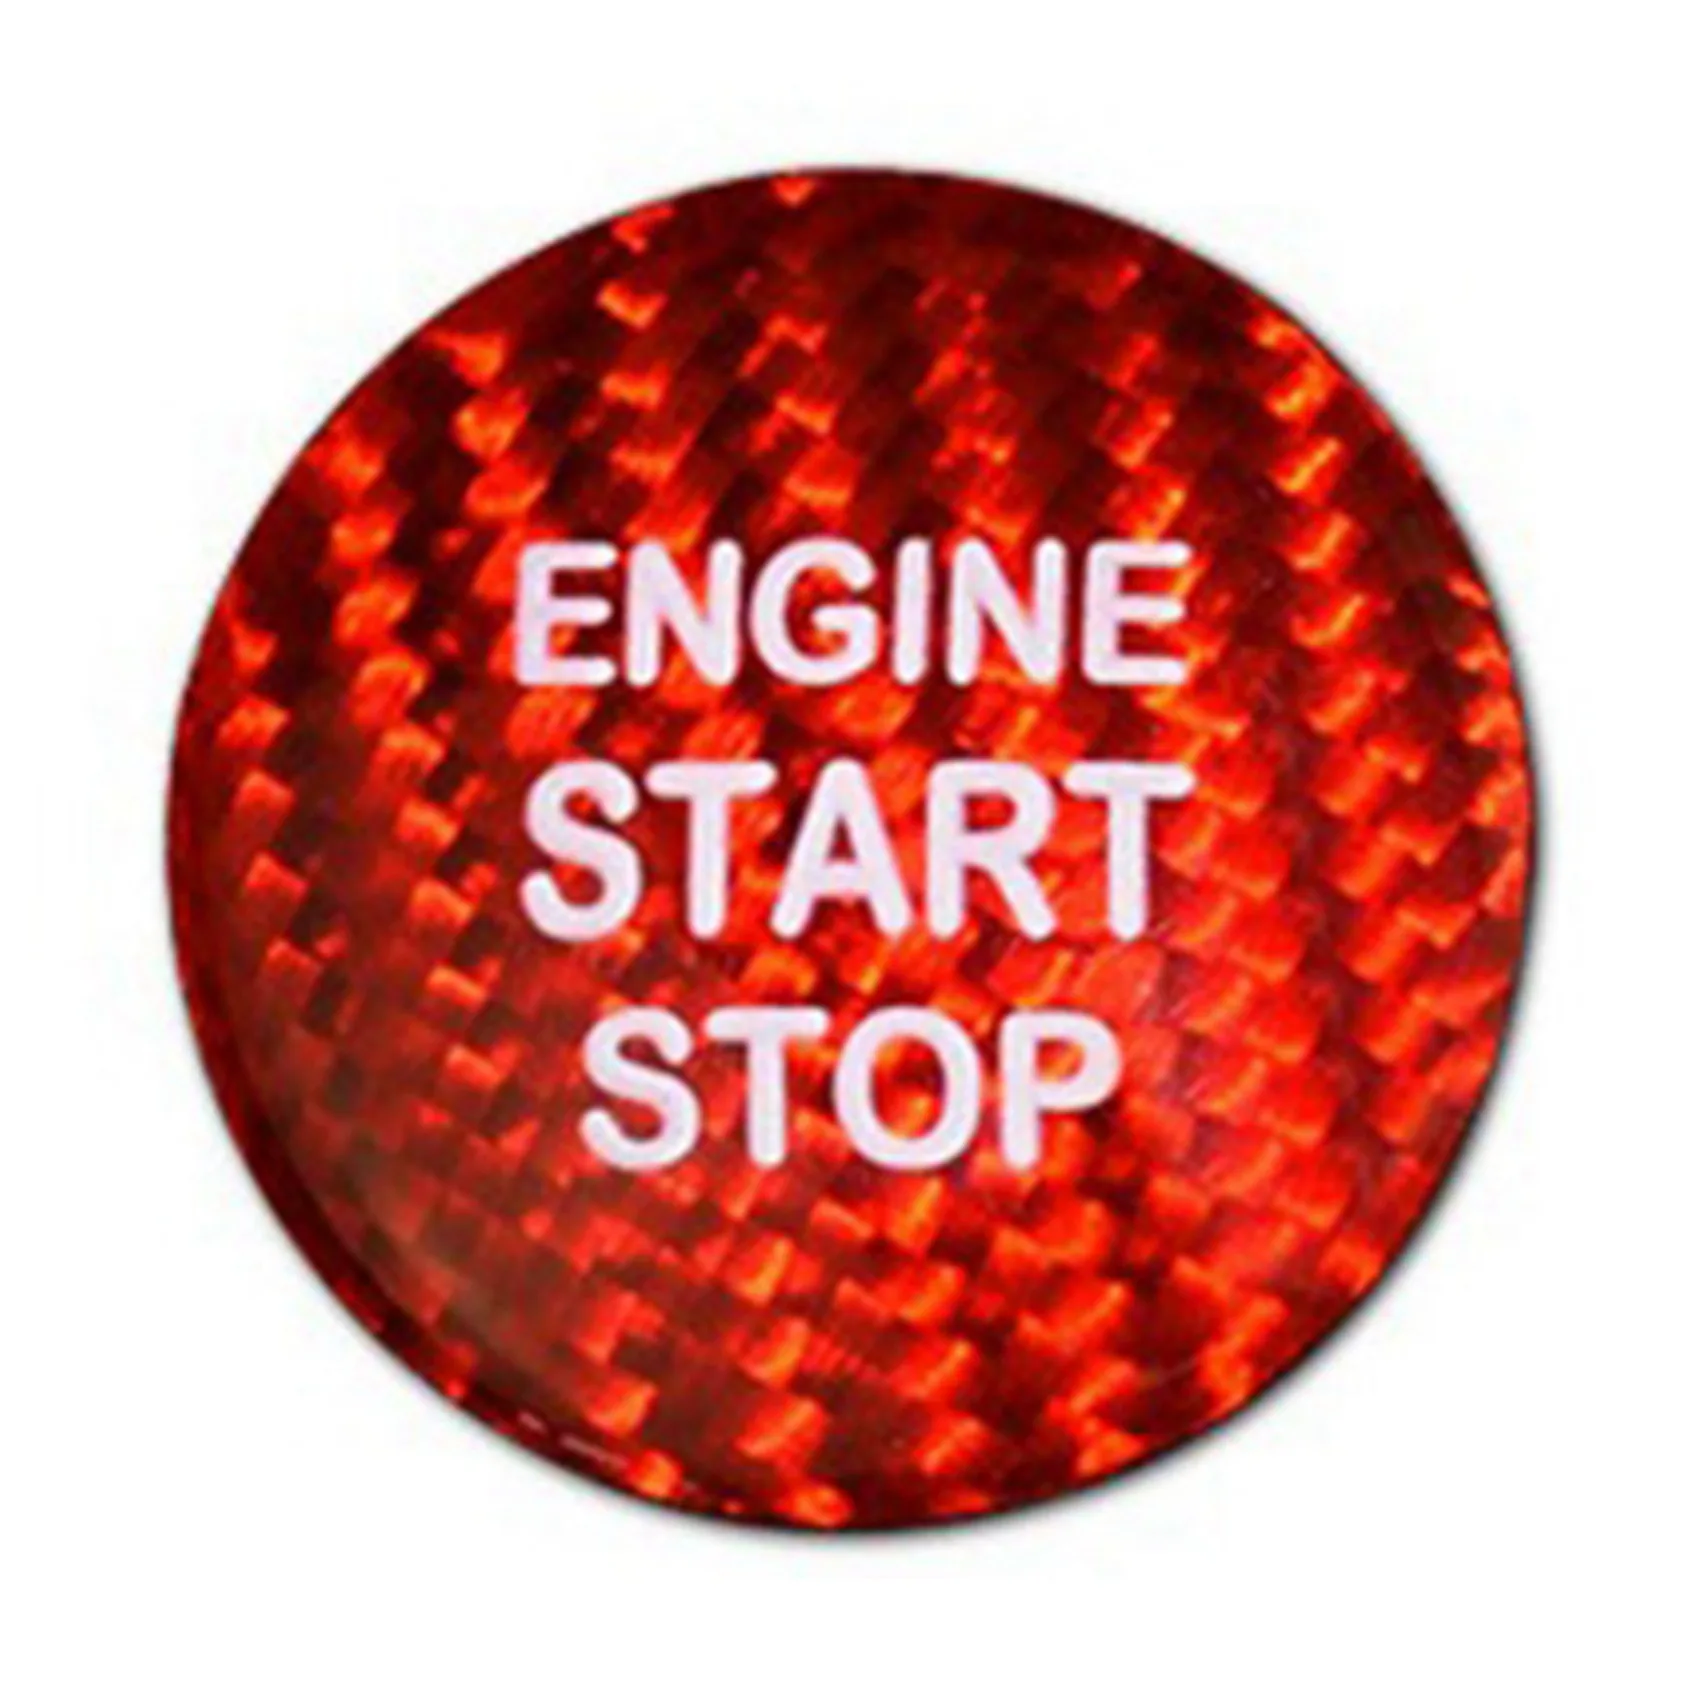 

Carbon Fiber Red Interior Engine Start Stop Push Button Cover Cap Trim for Toyota 86 Corolla RAV4 Camry CHR